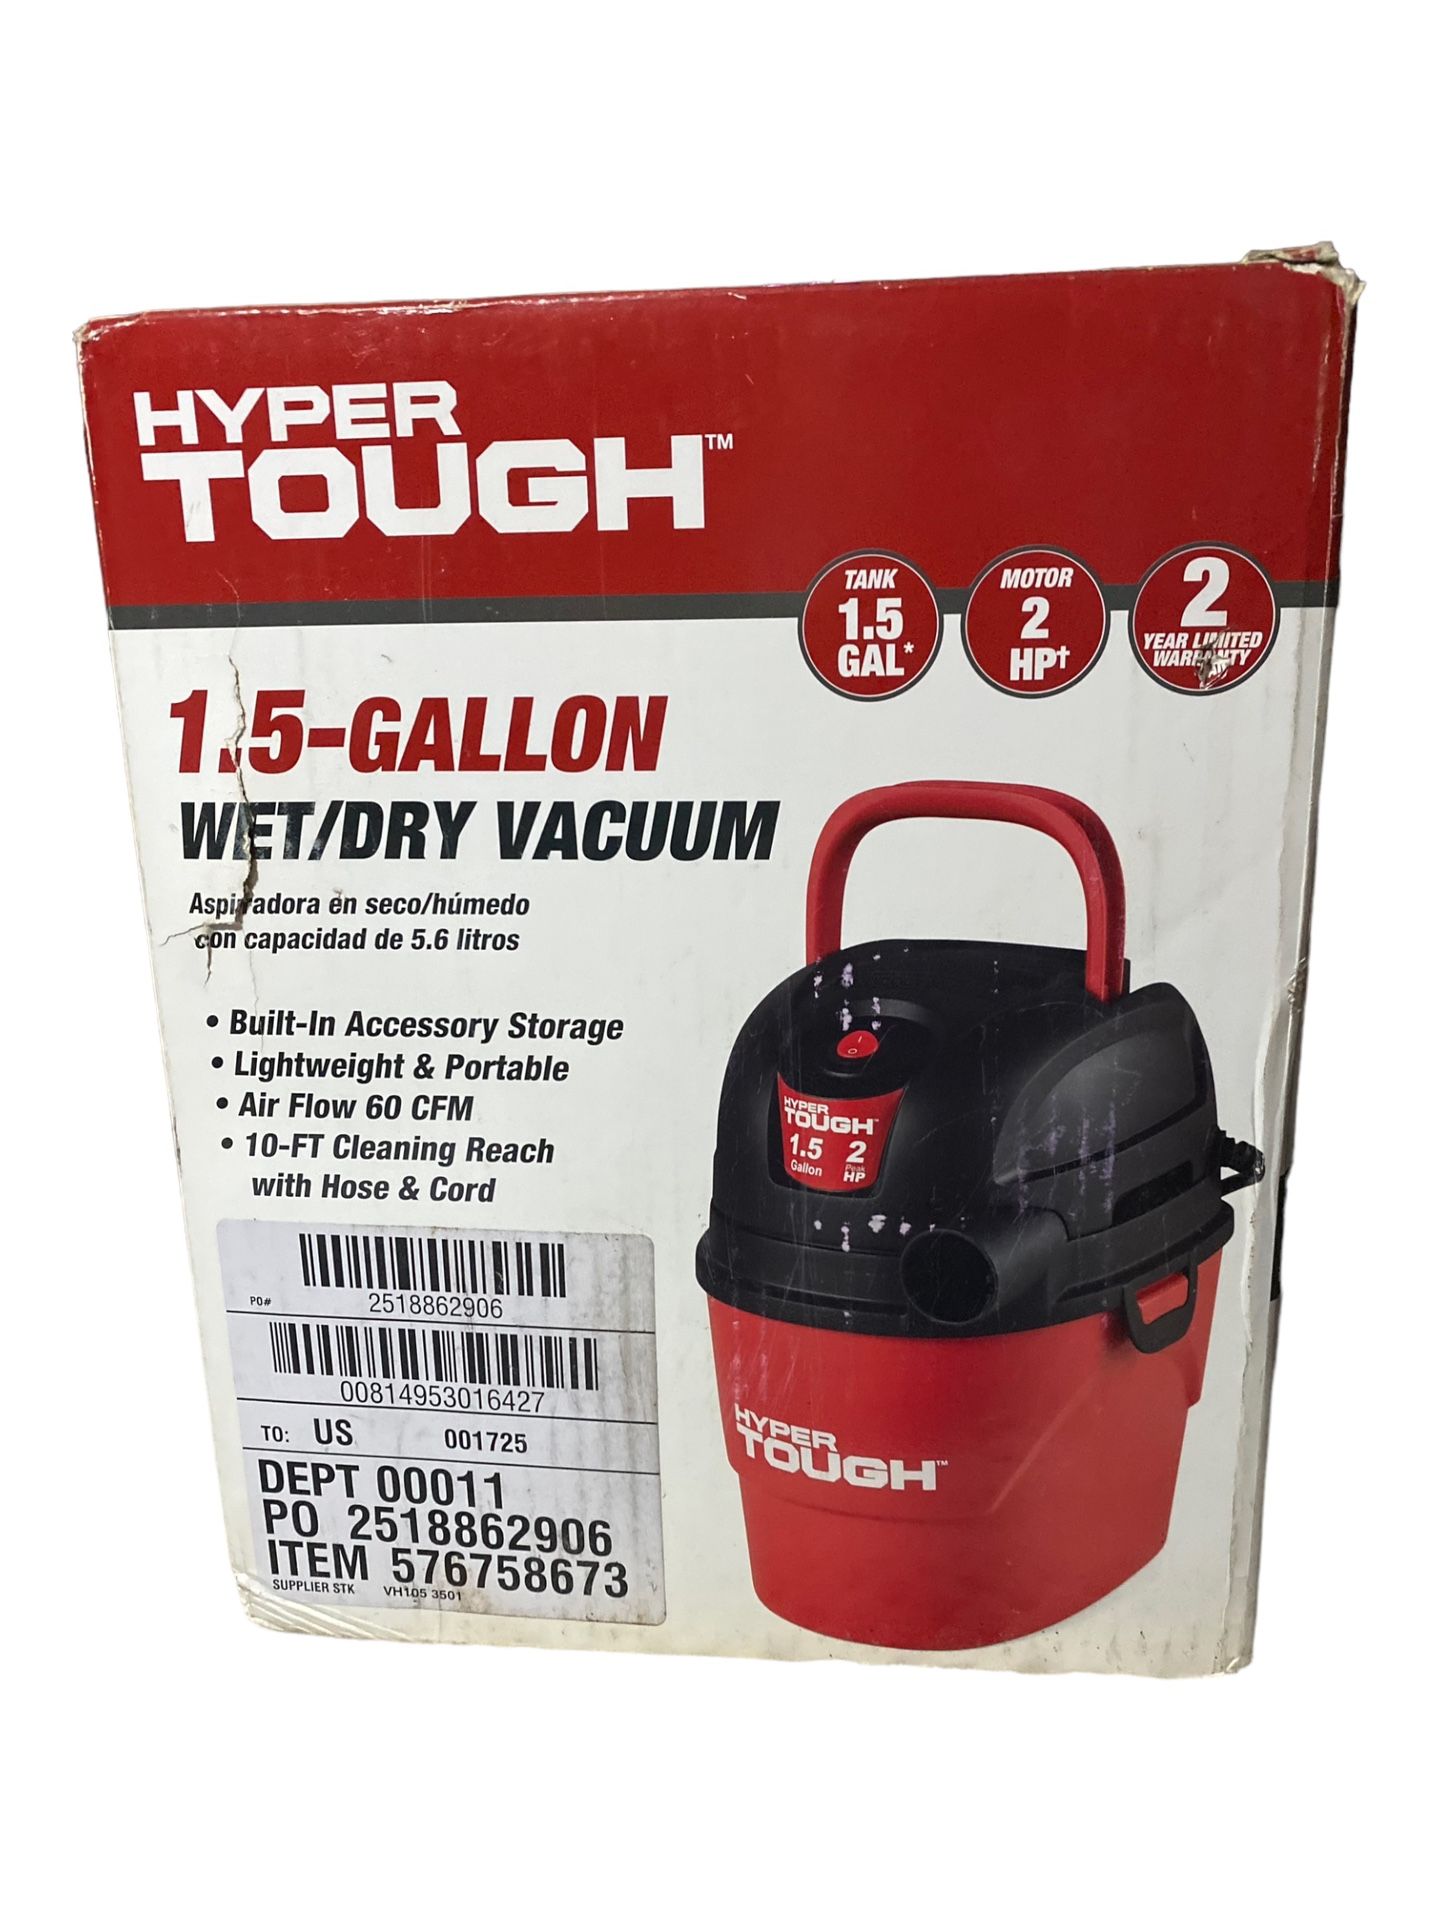 Hyper Tough 1.5 Gal 2 HP Wet/Dry Vacuum NEW in Box